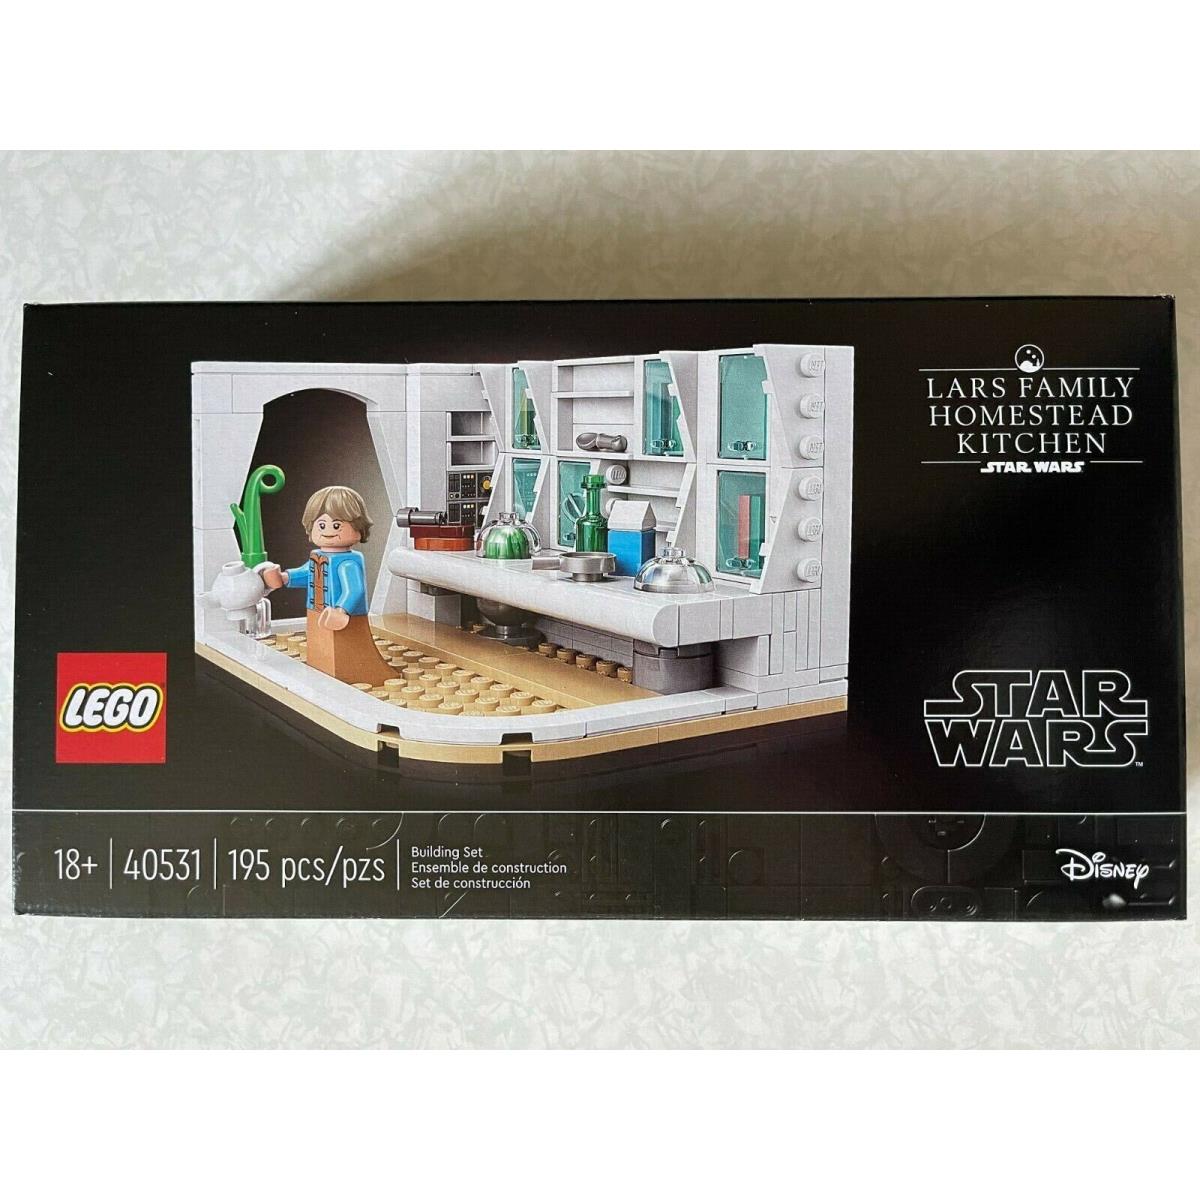 Lego Star Wars 40531 Lars Family Homestead Kitchen Nisb